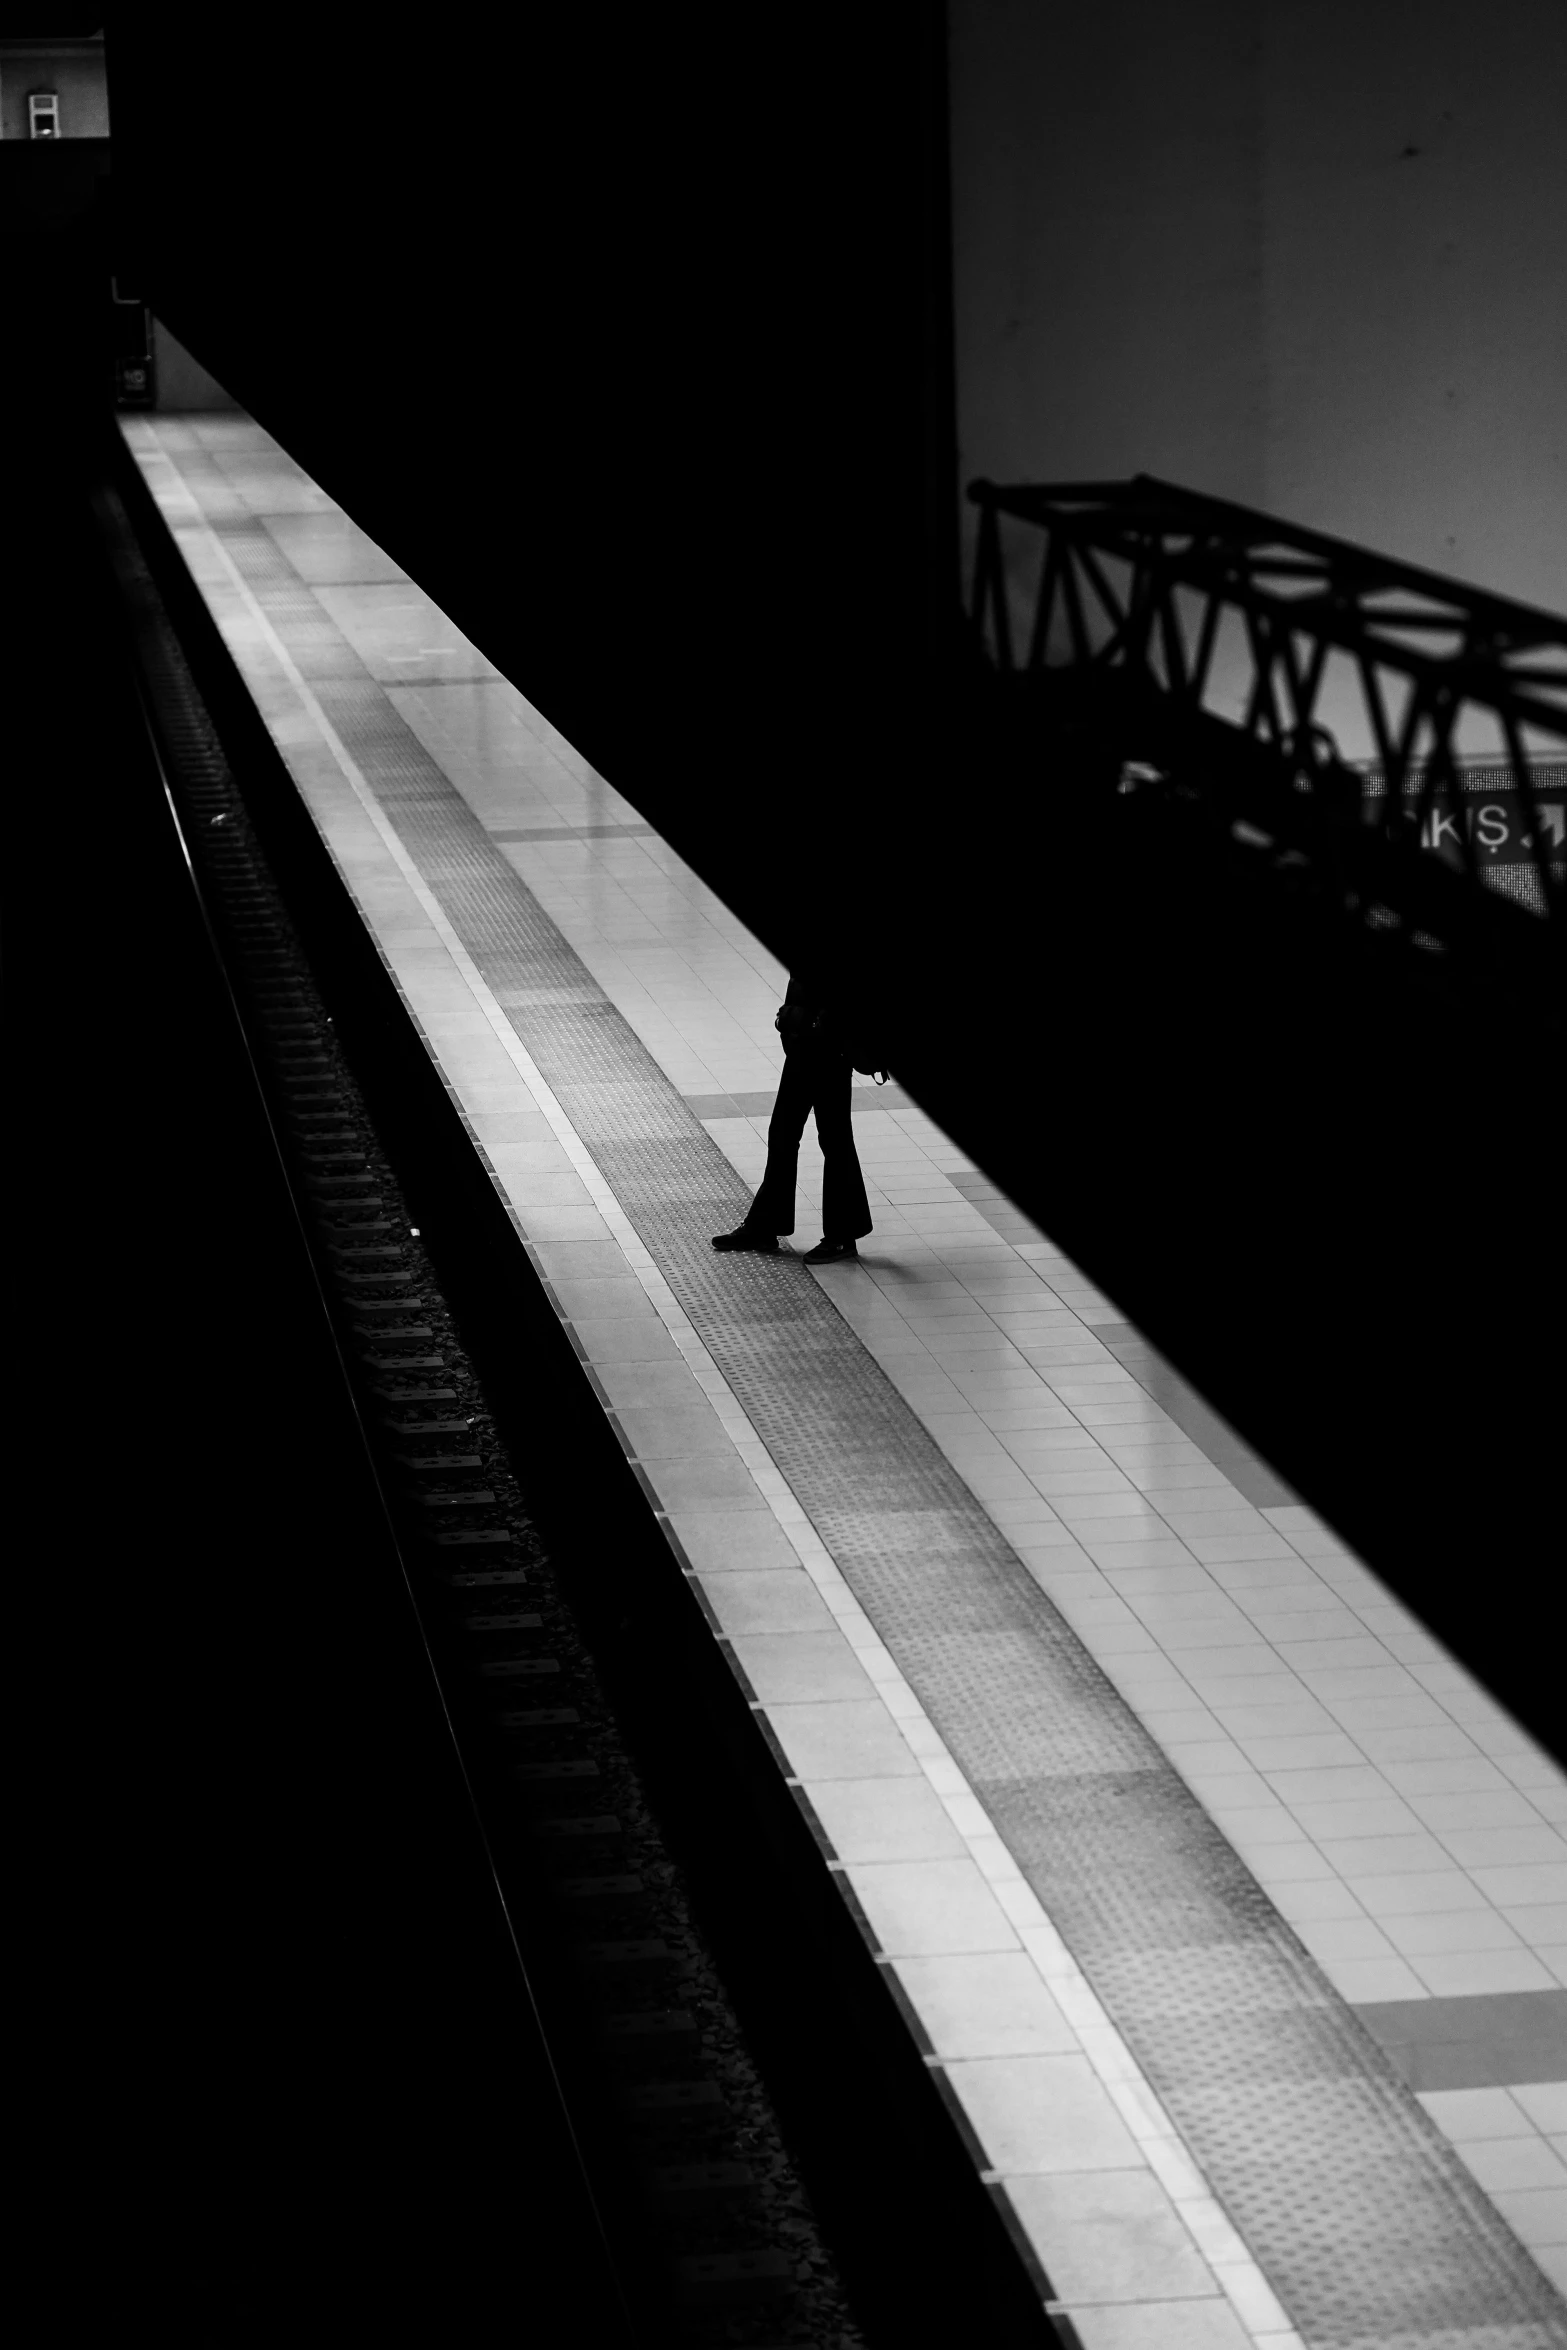 a person walking down a sidewalk next to a train track